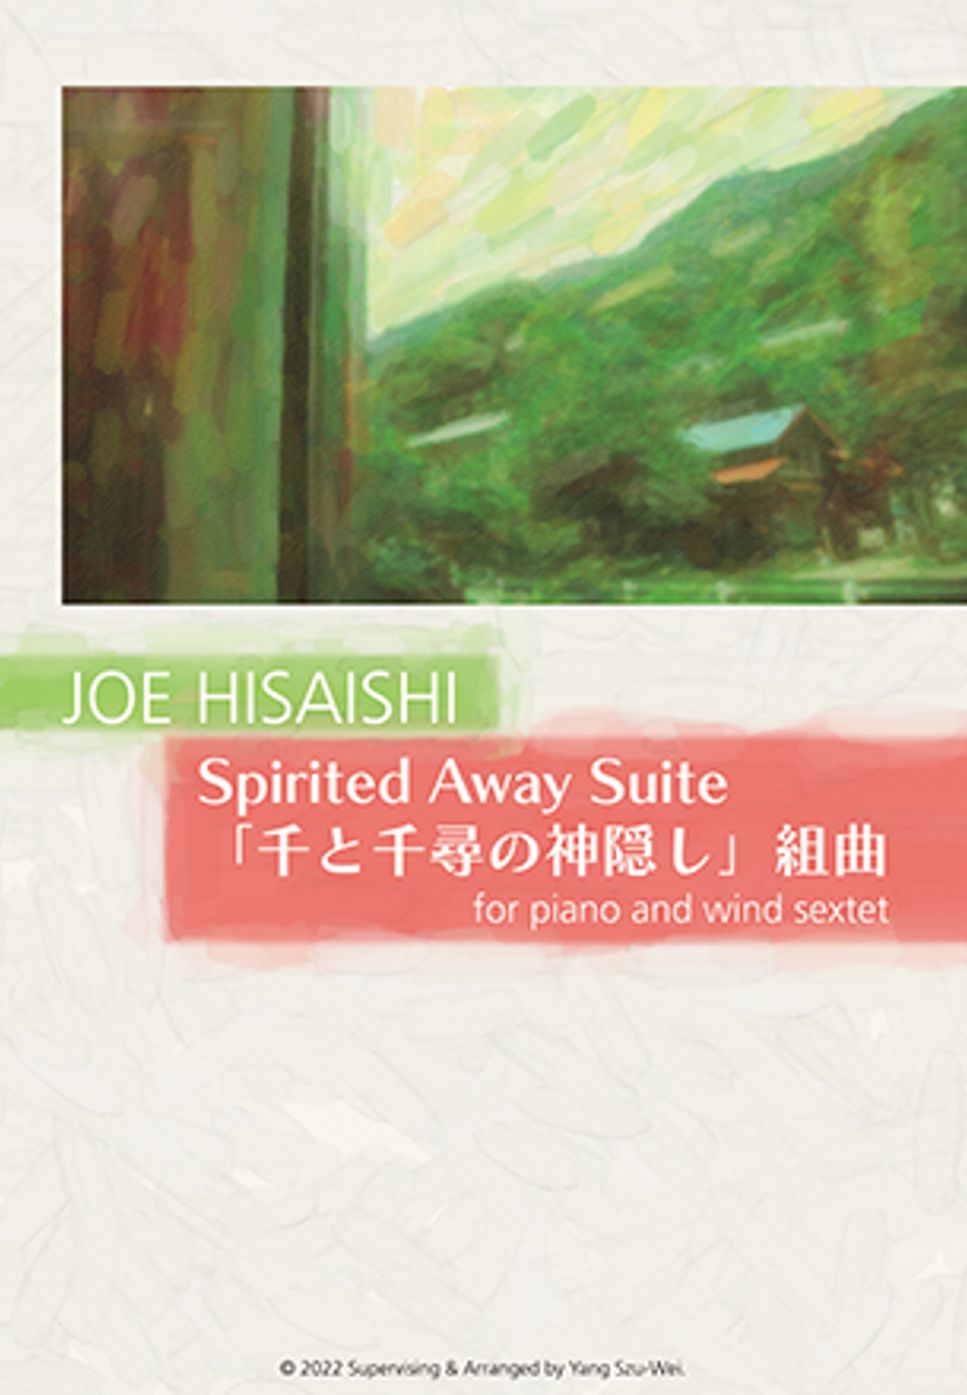 Joe Hisaishi - Spirited Away Suite (Arrangement Edition) by Yang Szu-Wei